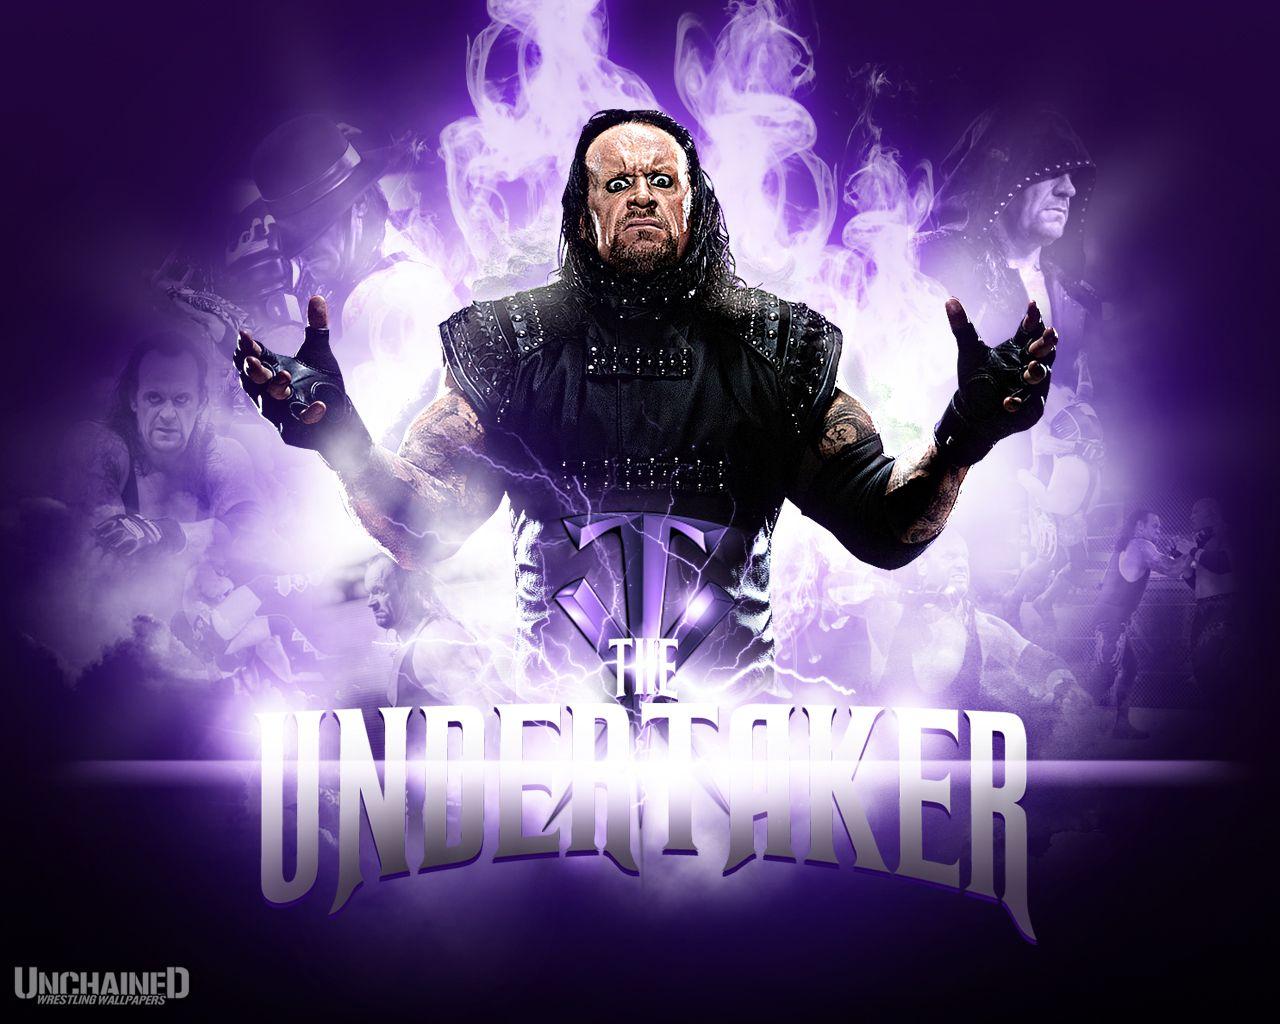 HDWP 49: Undertaker Wallpaper, Undertaker Collection Of Widescreen